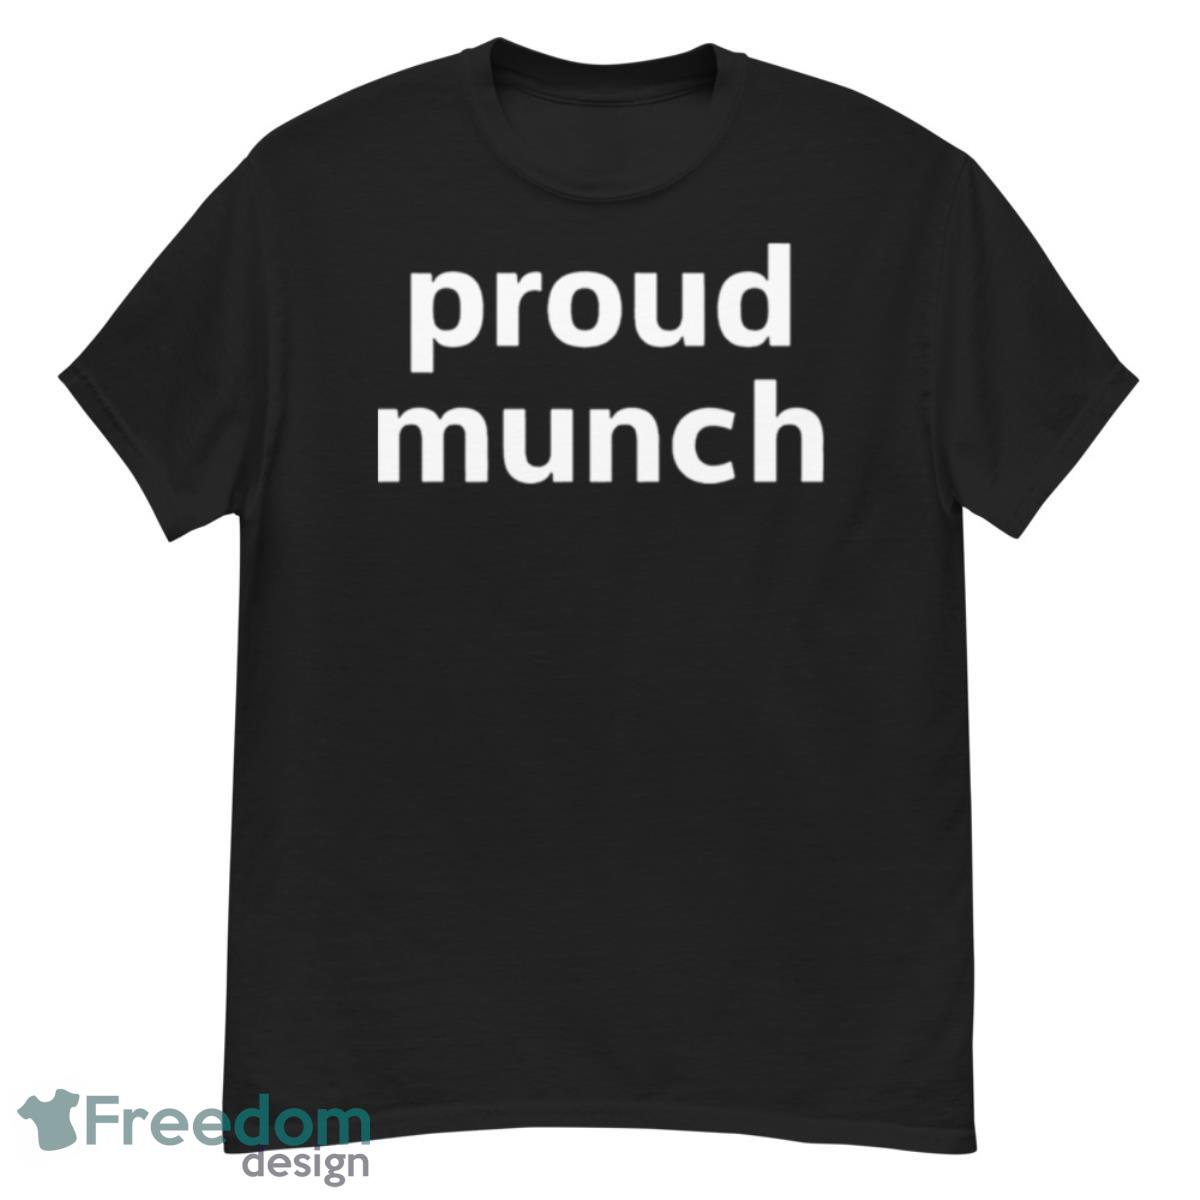 Proud munch shirt - G500 Men’s Classic T-Shirt